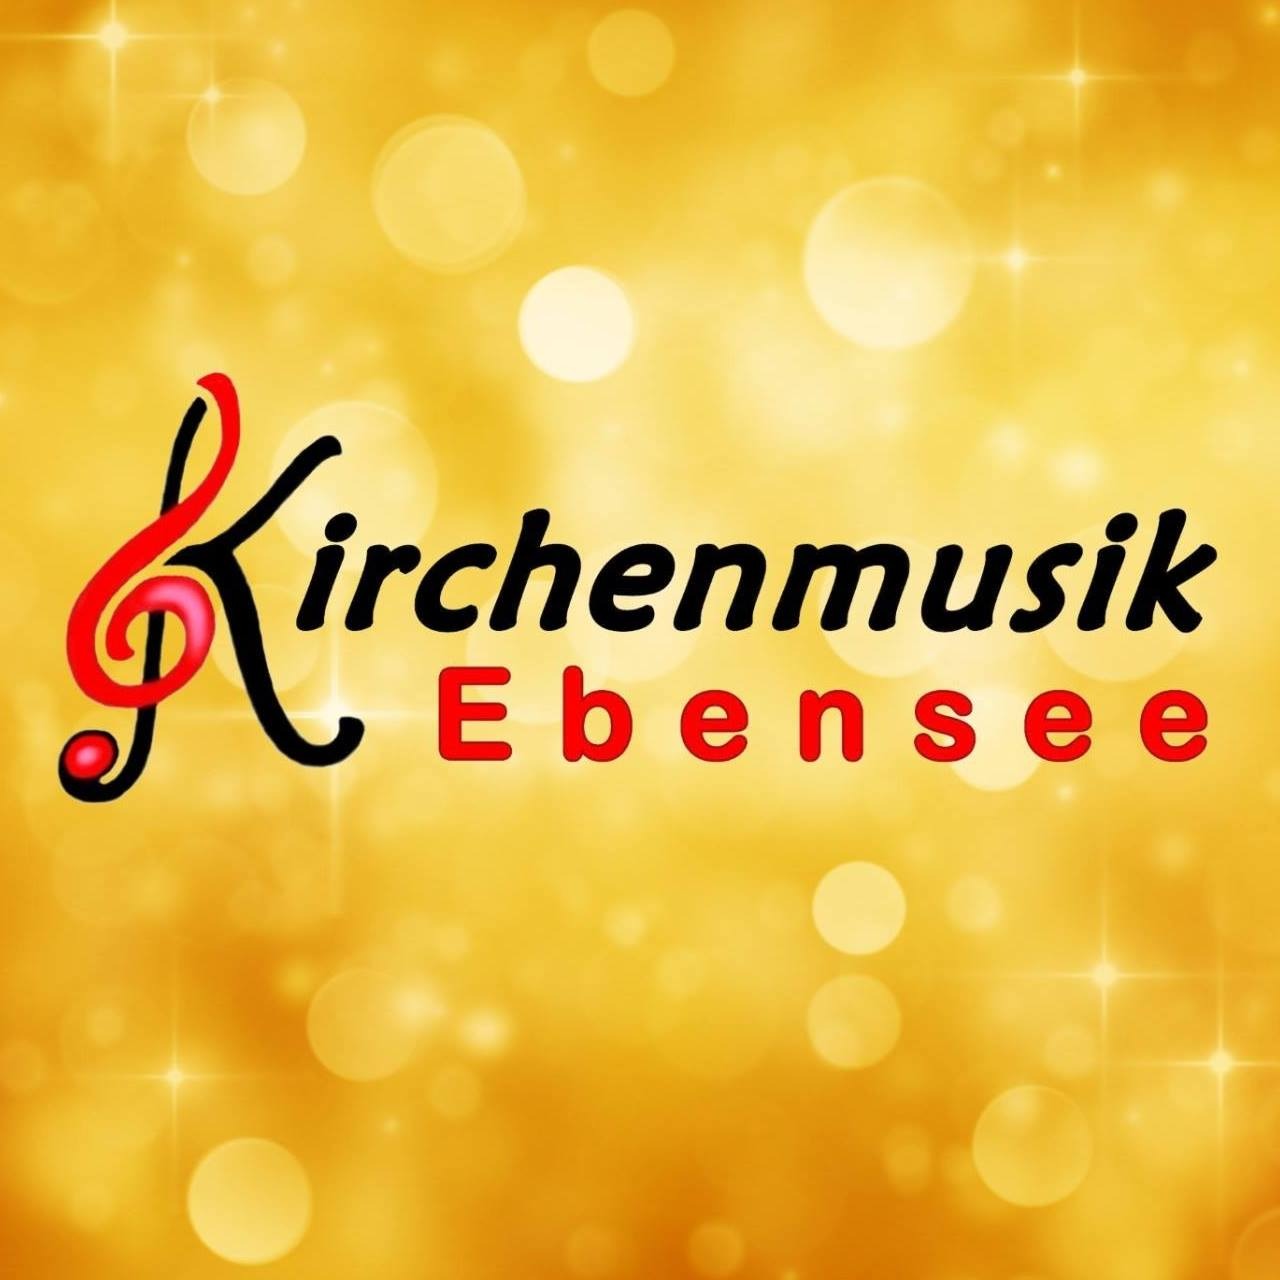 IMG Kirchenmusik ebensee